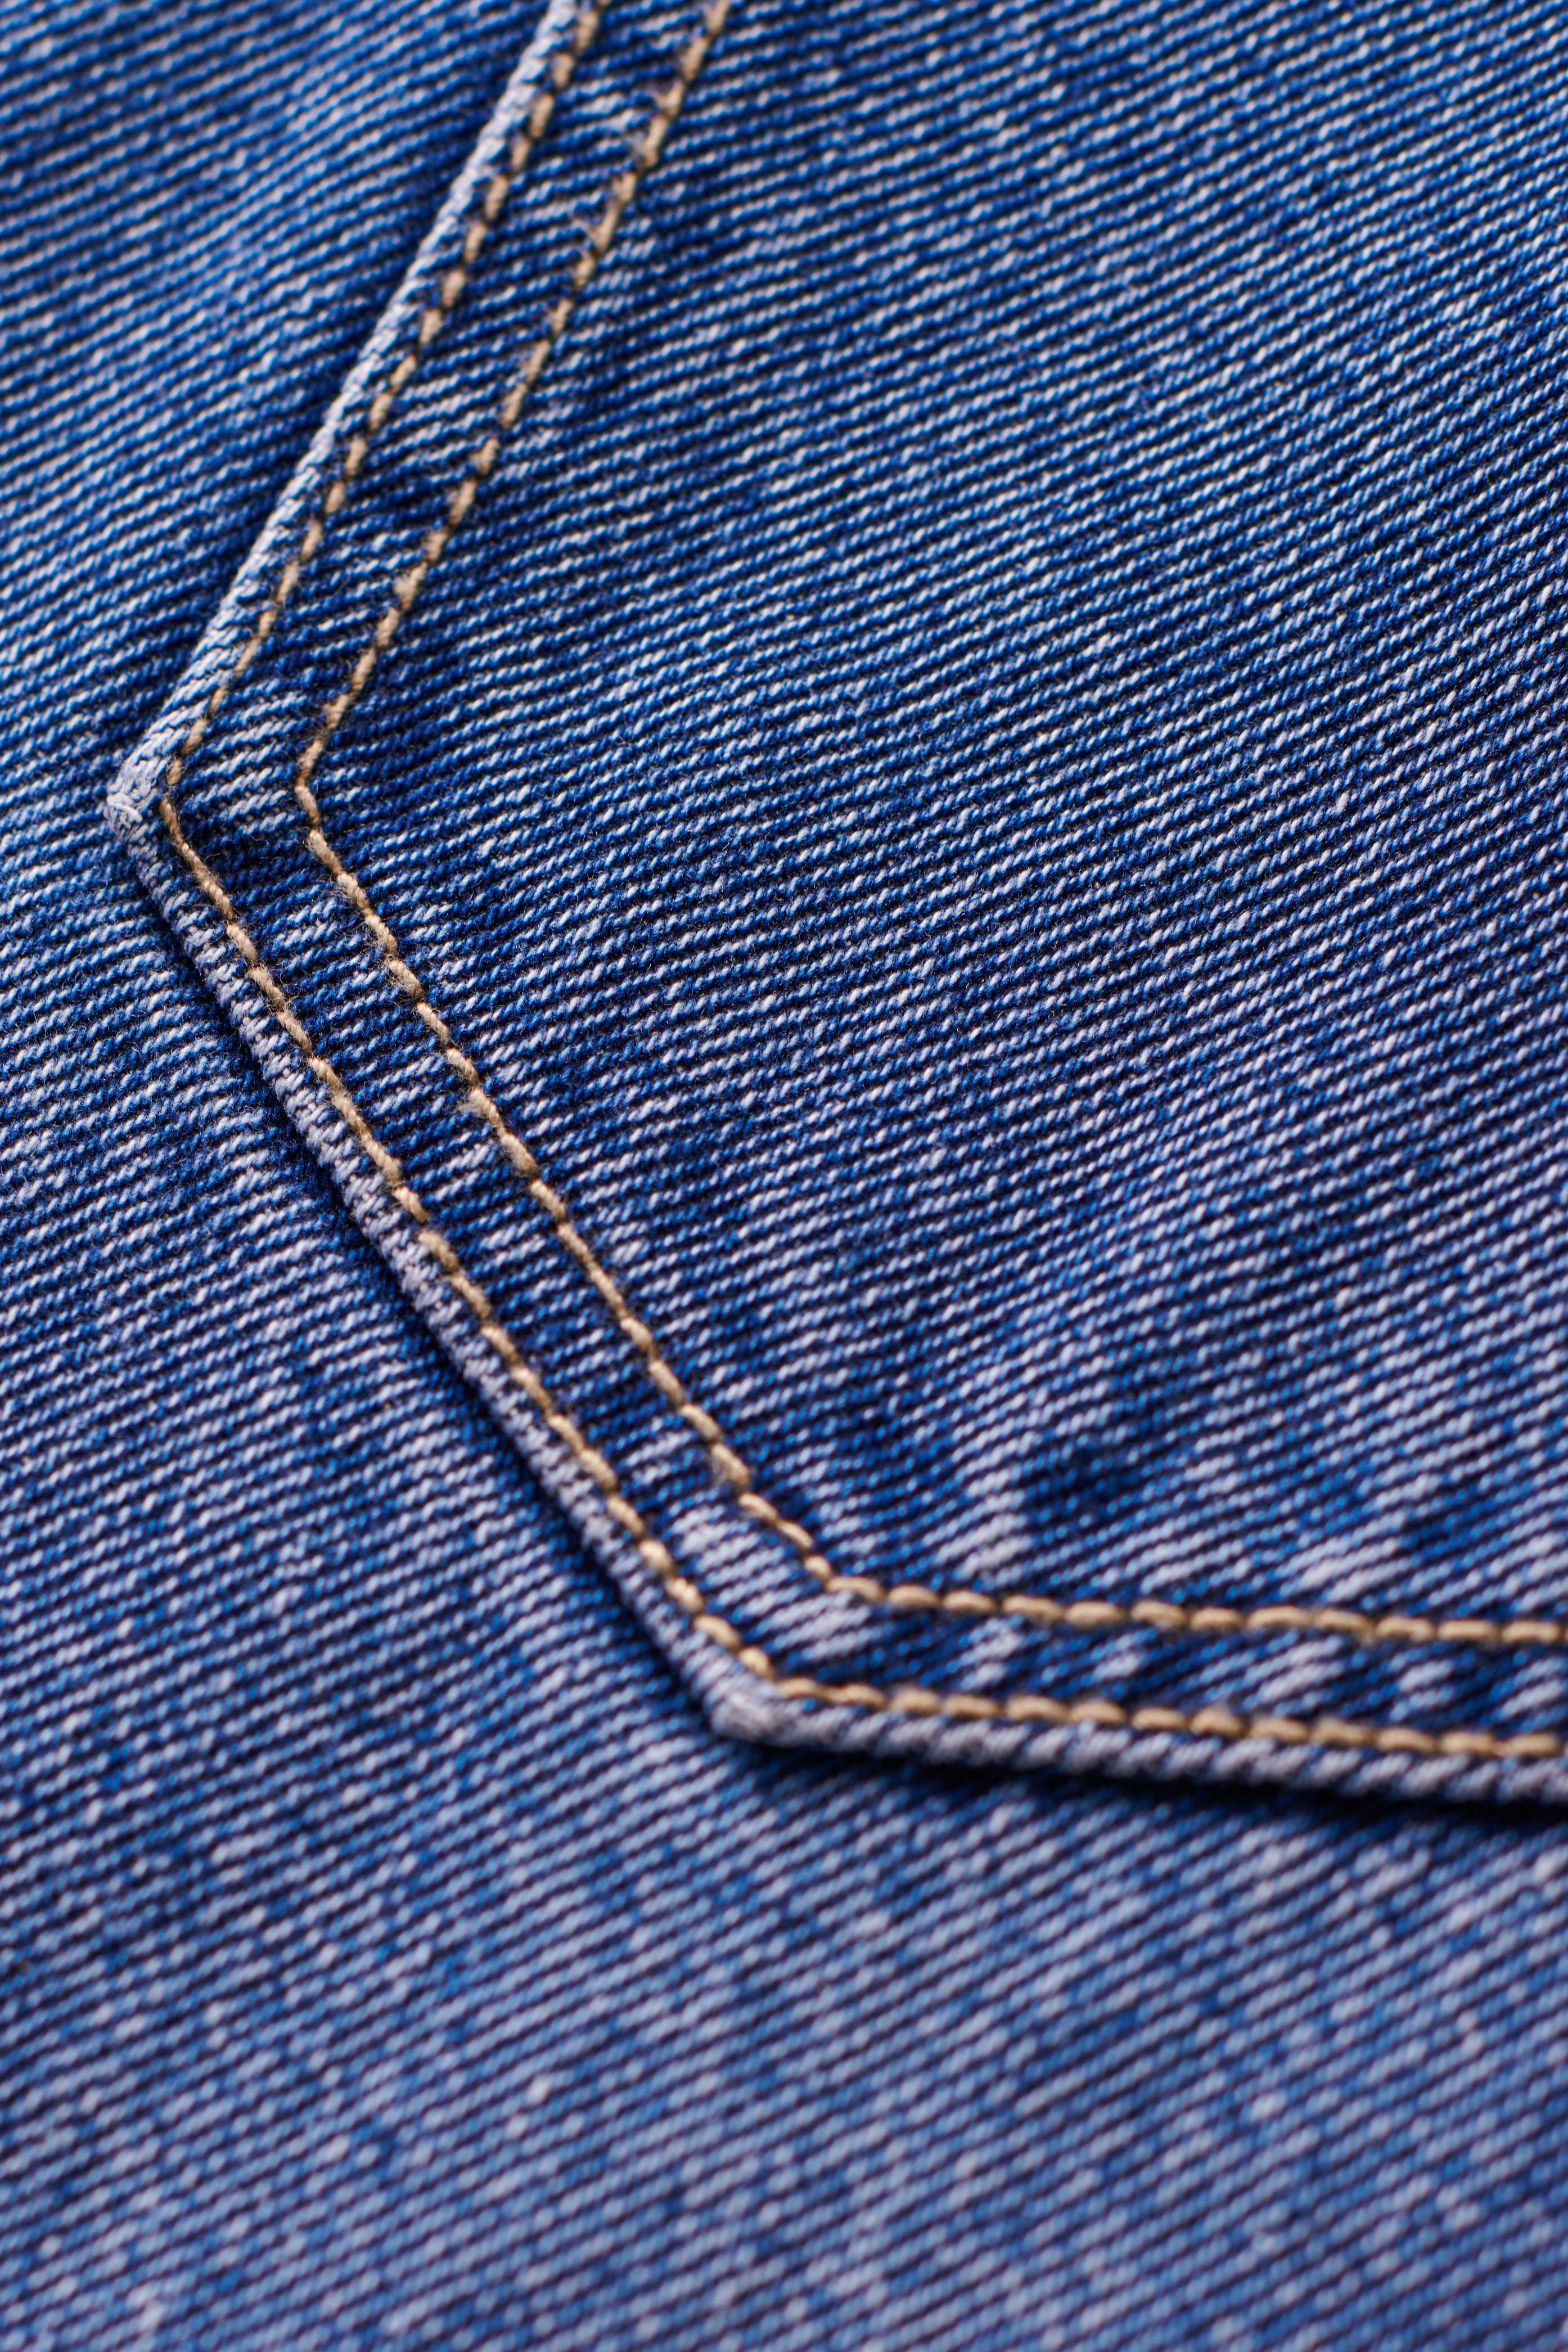 Close-Up Shot of Blue Denim Jeans Pocket · Free Stock Photo